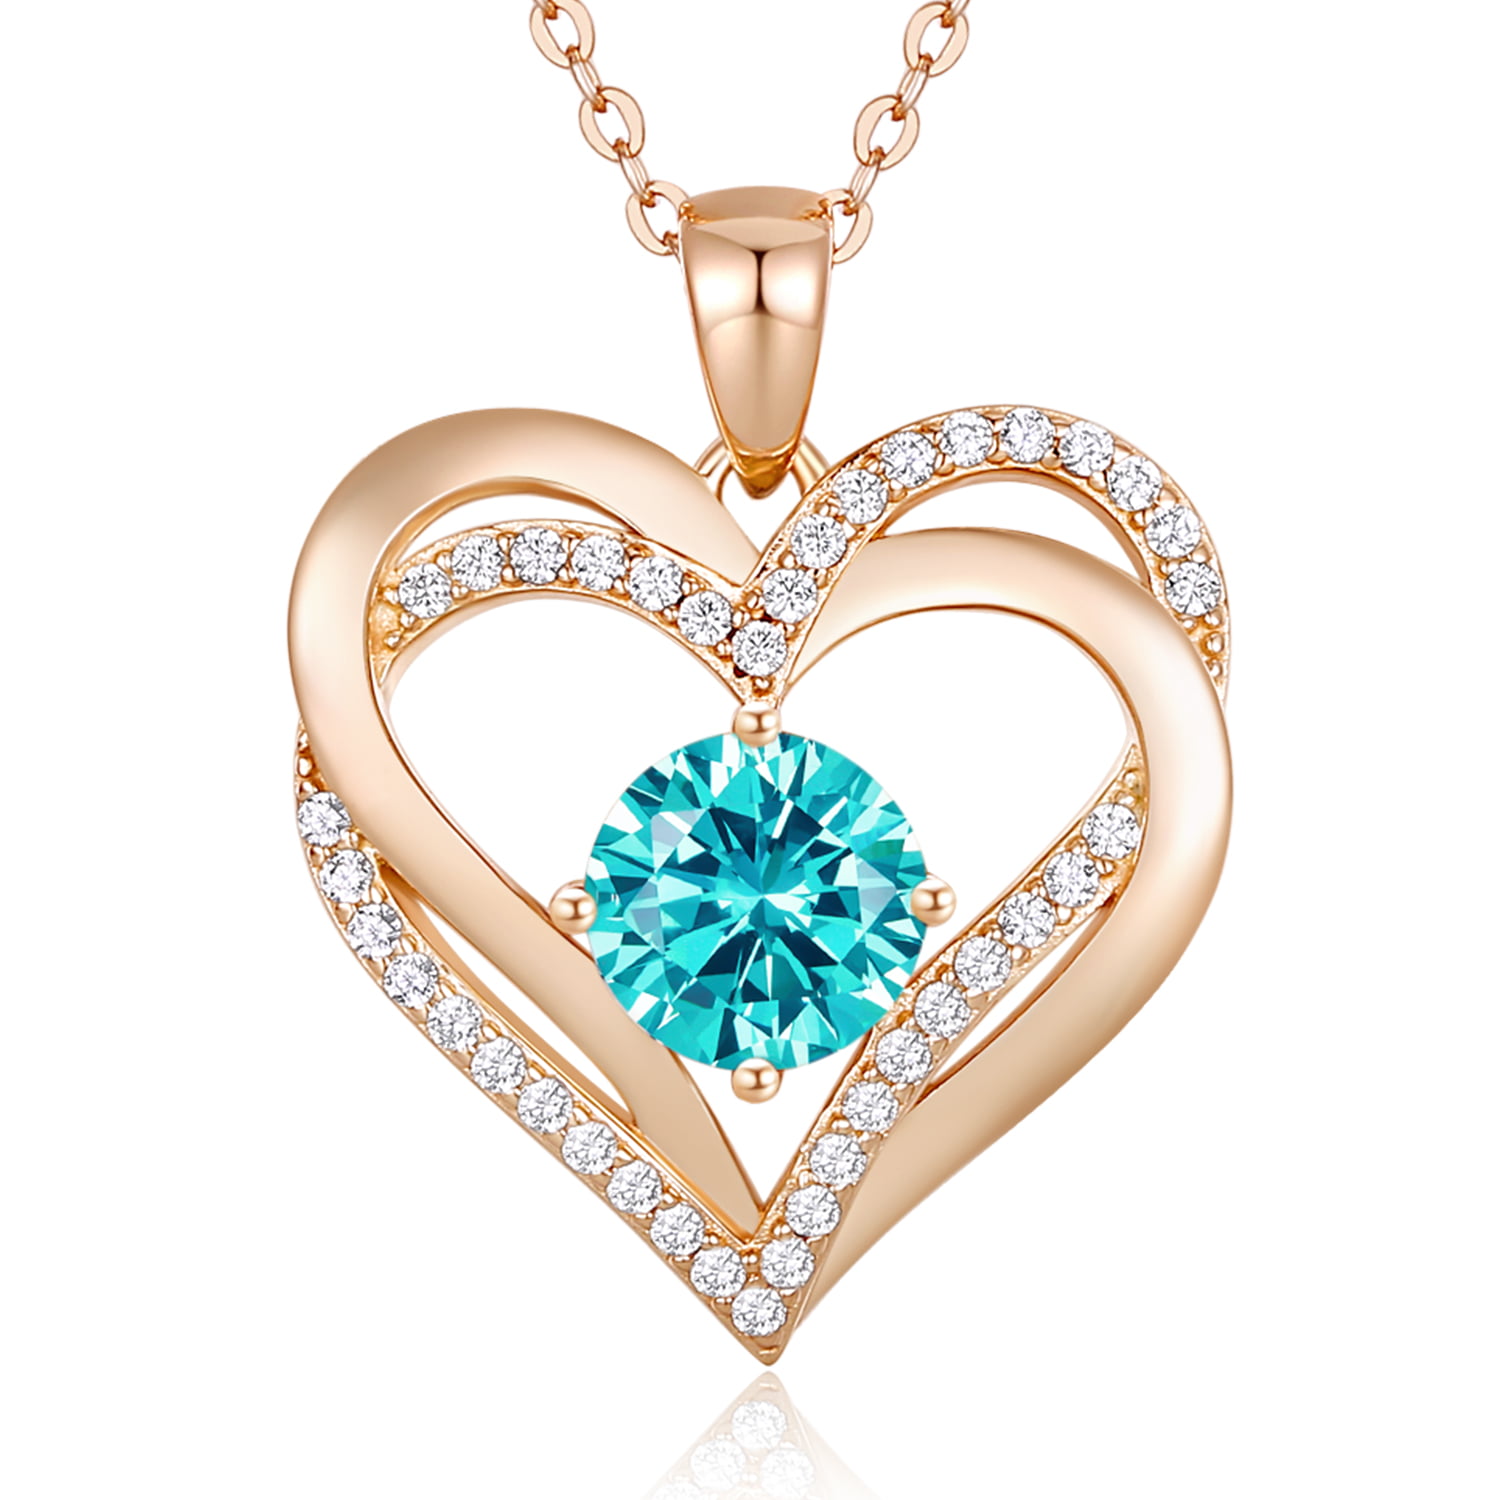 43 Ct Love Heart Women Wedding GIFT Ocean Blue Topaz Gem Silver Necklace Pendant